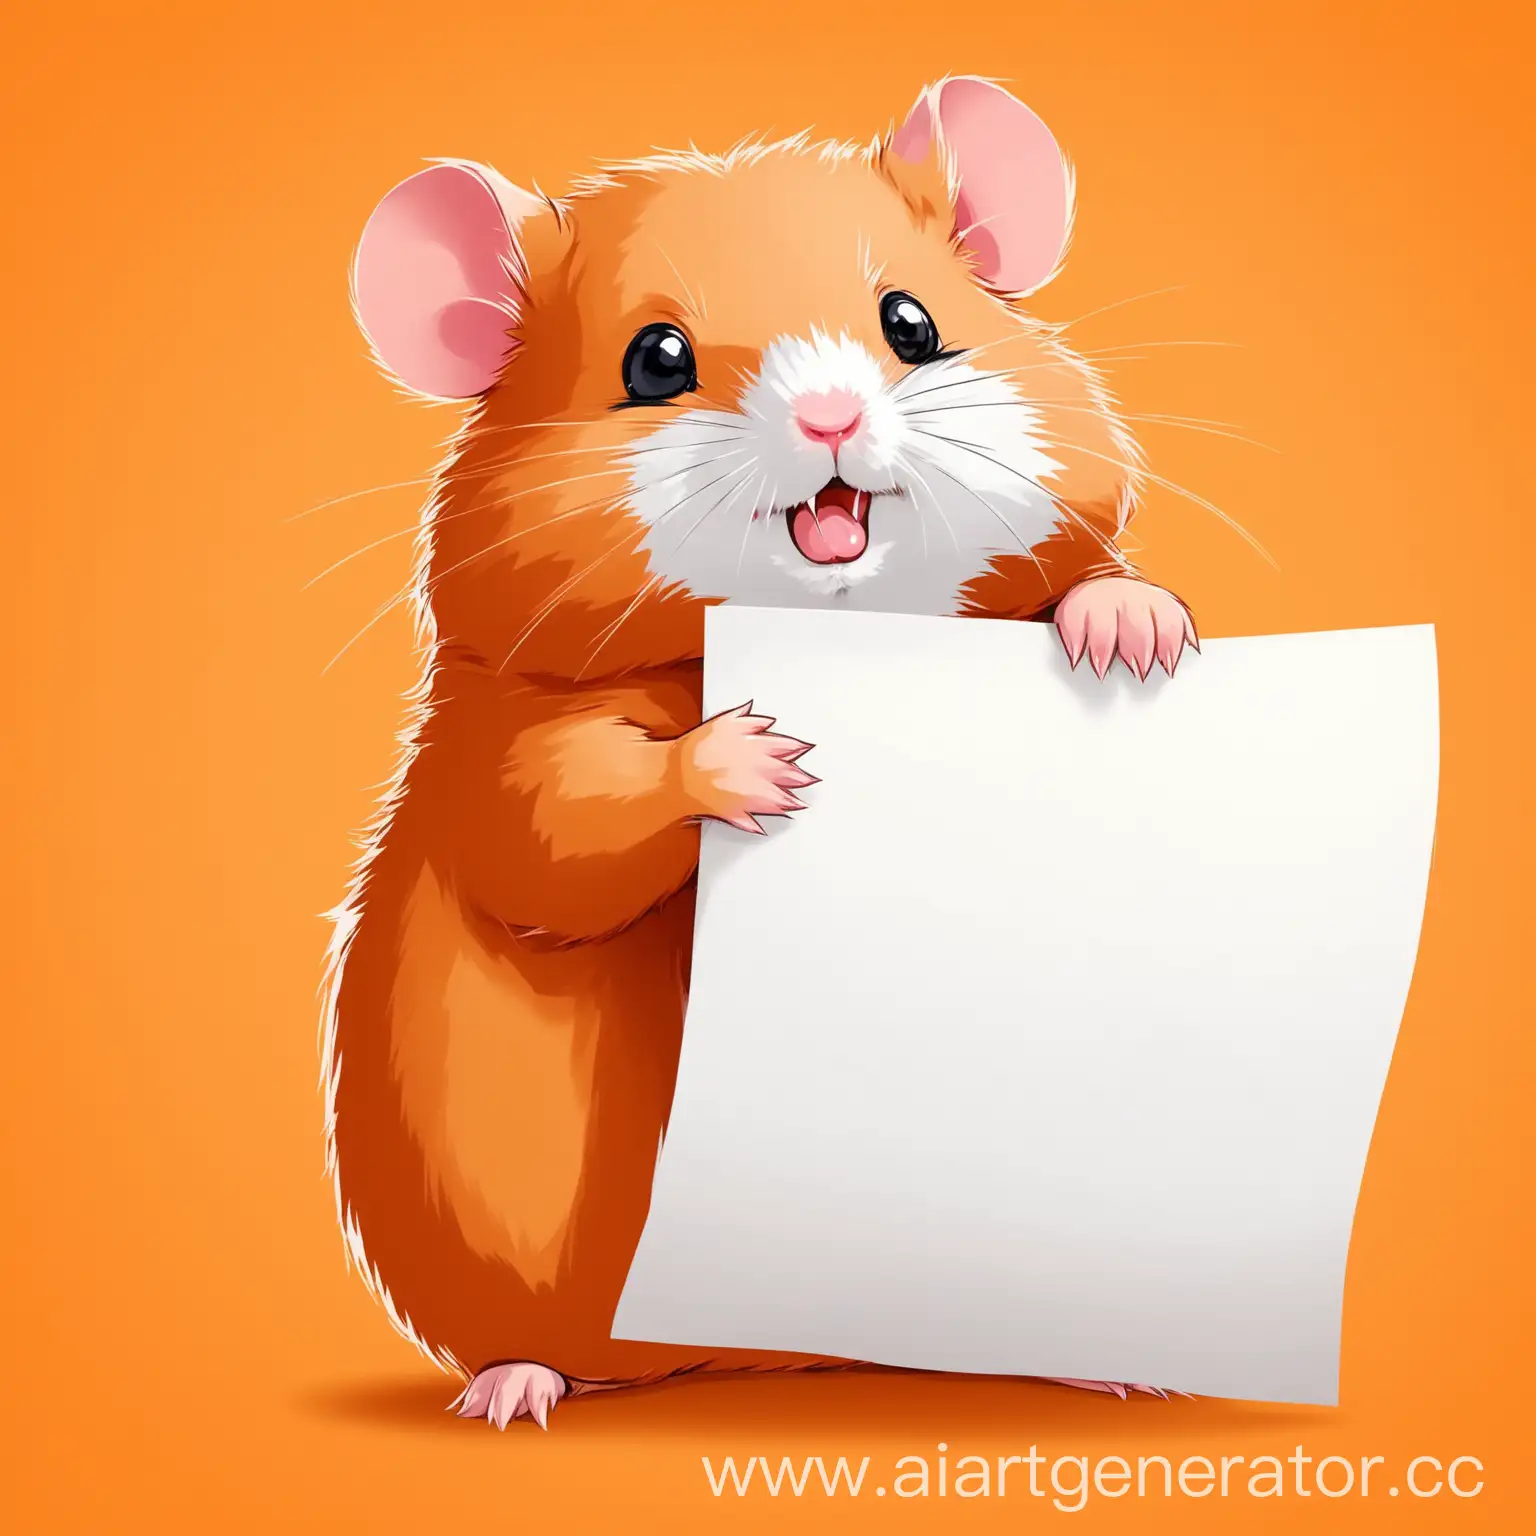 Adorable-Red-Hamster-Holding-Blank-Paper-on-Vibrant-Orange-Background